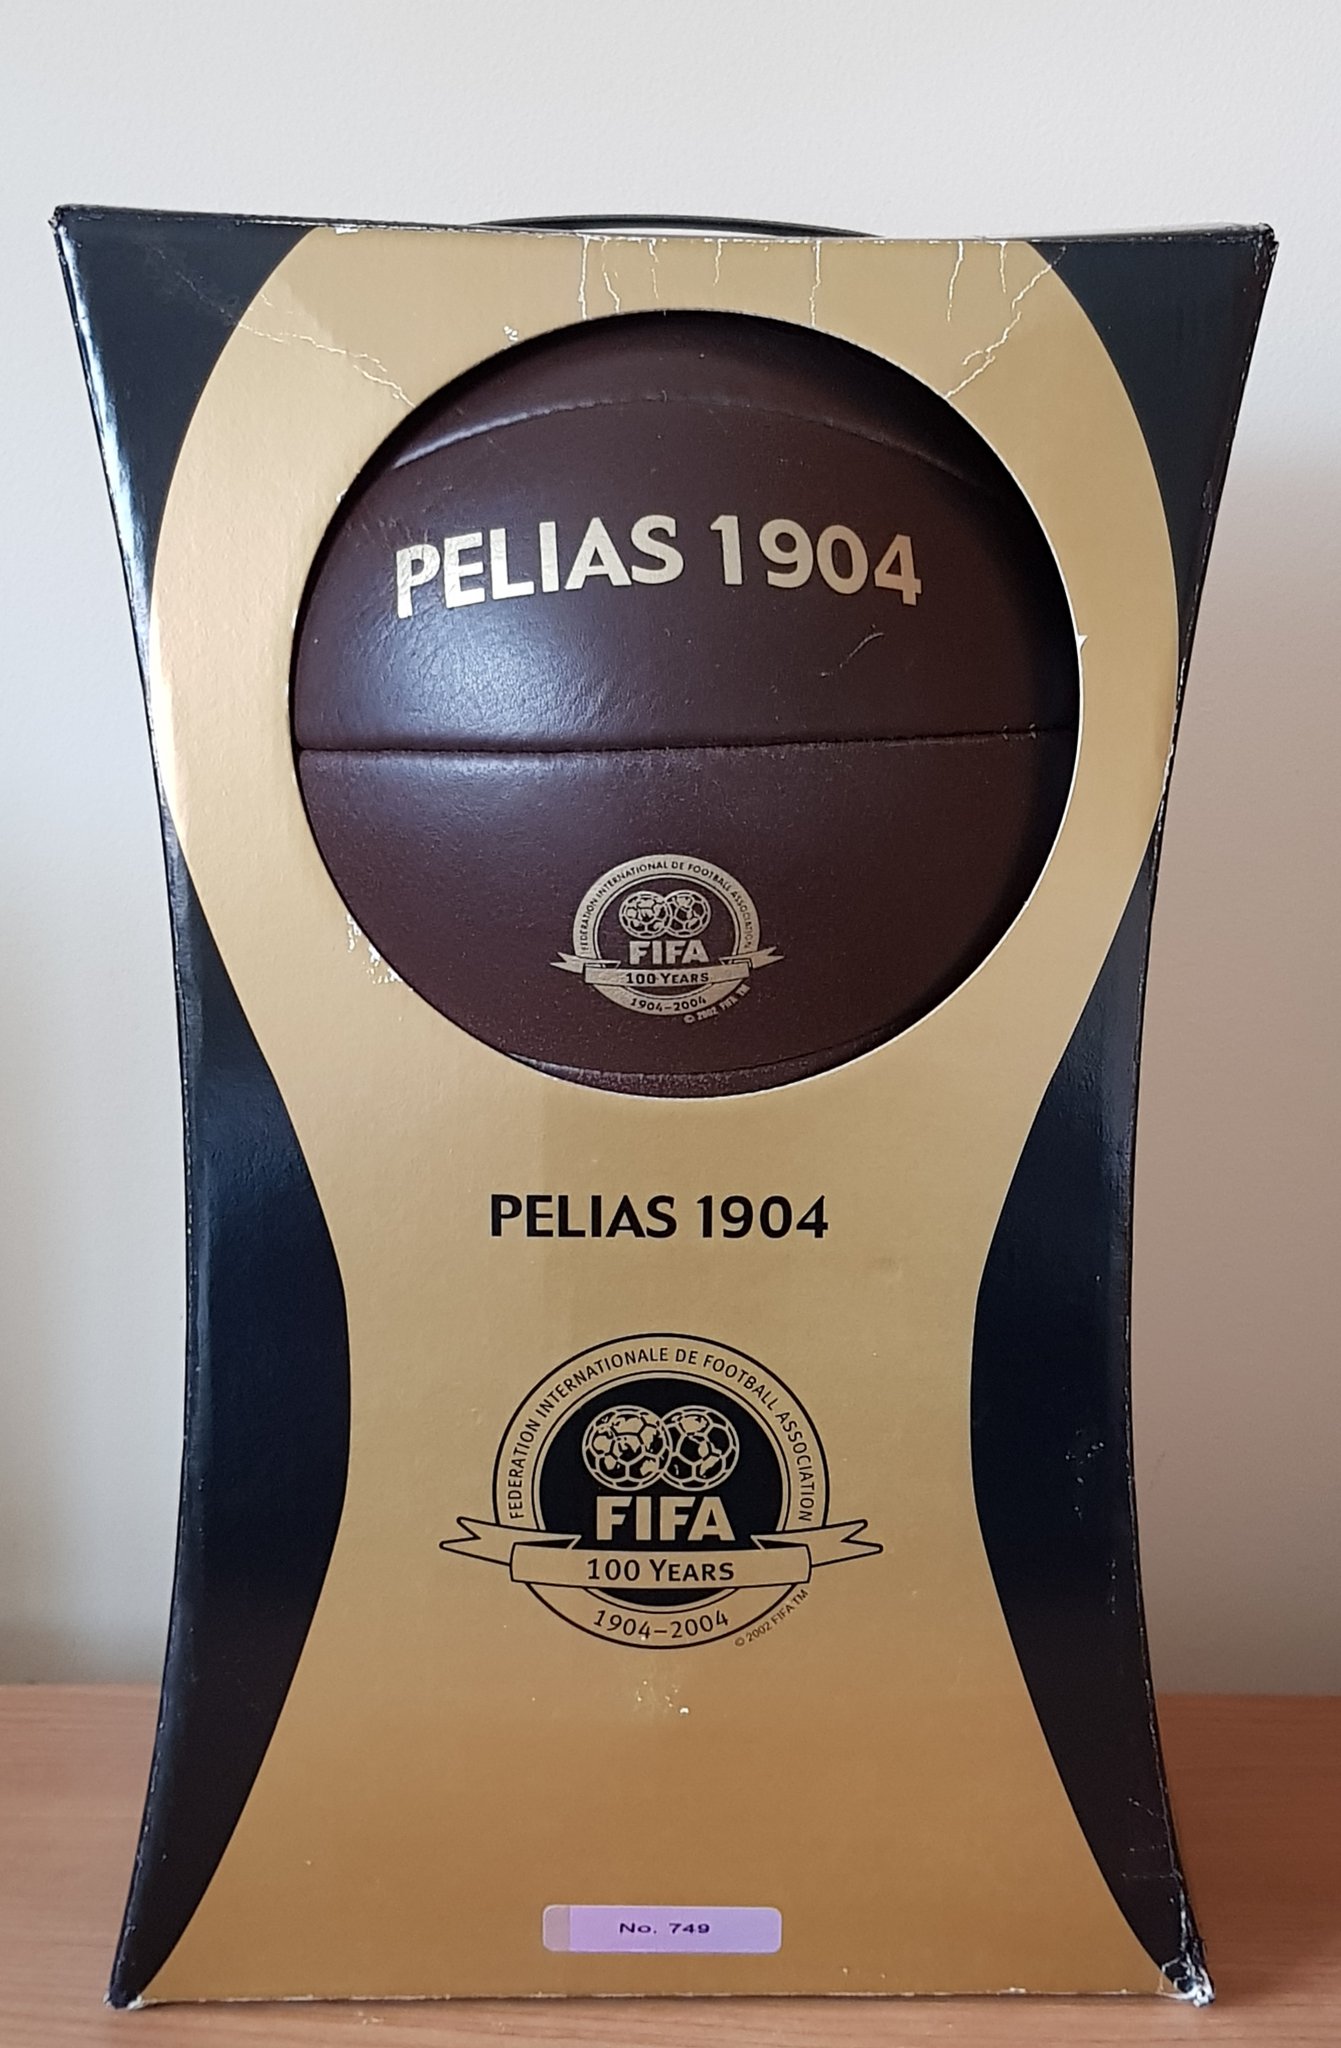 Rob Filby on Twitter: Pelias - 2 Ball Limited Edition Set Commemorating FIFA 100 Years 1904-2004 #adidaspelias #pelias #officialmatchball #omb https://t.co/KYOymGQsyr" / Twitter